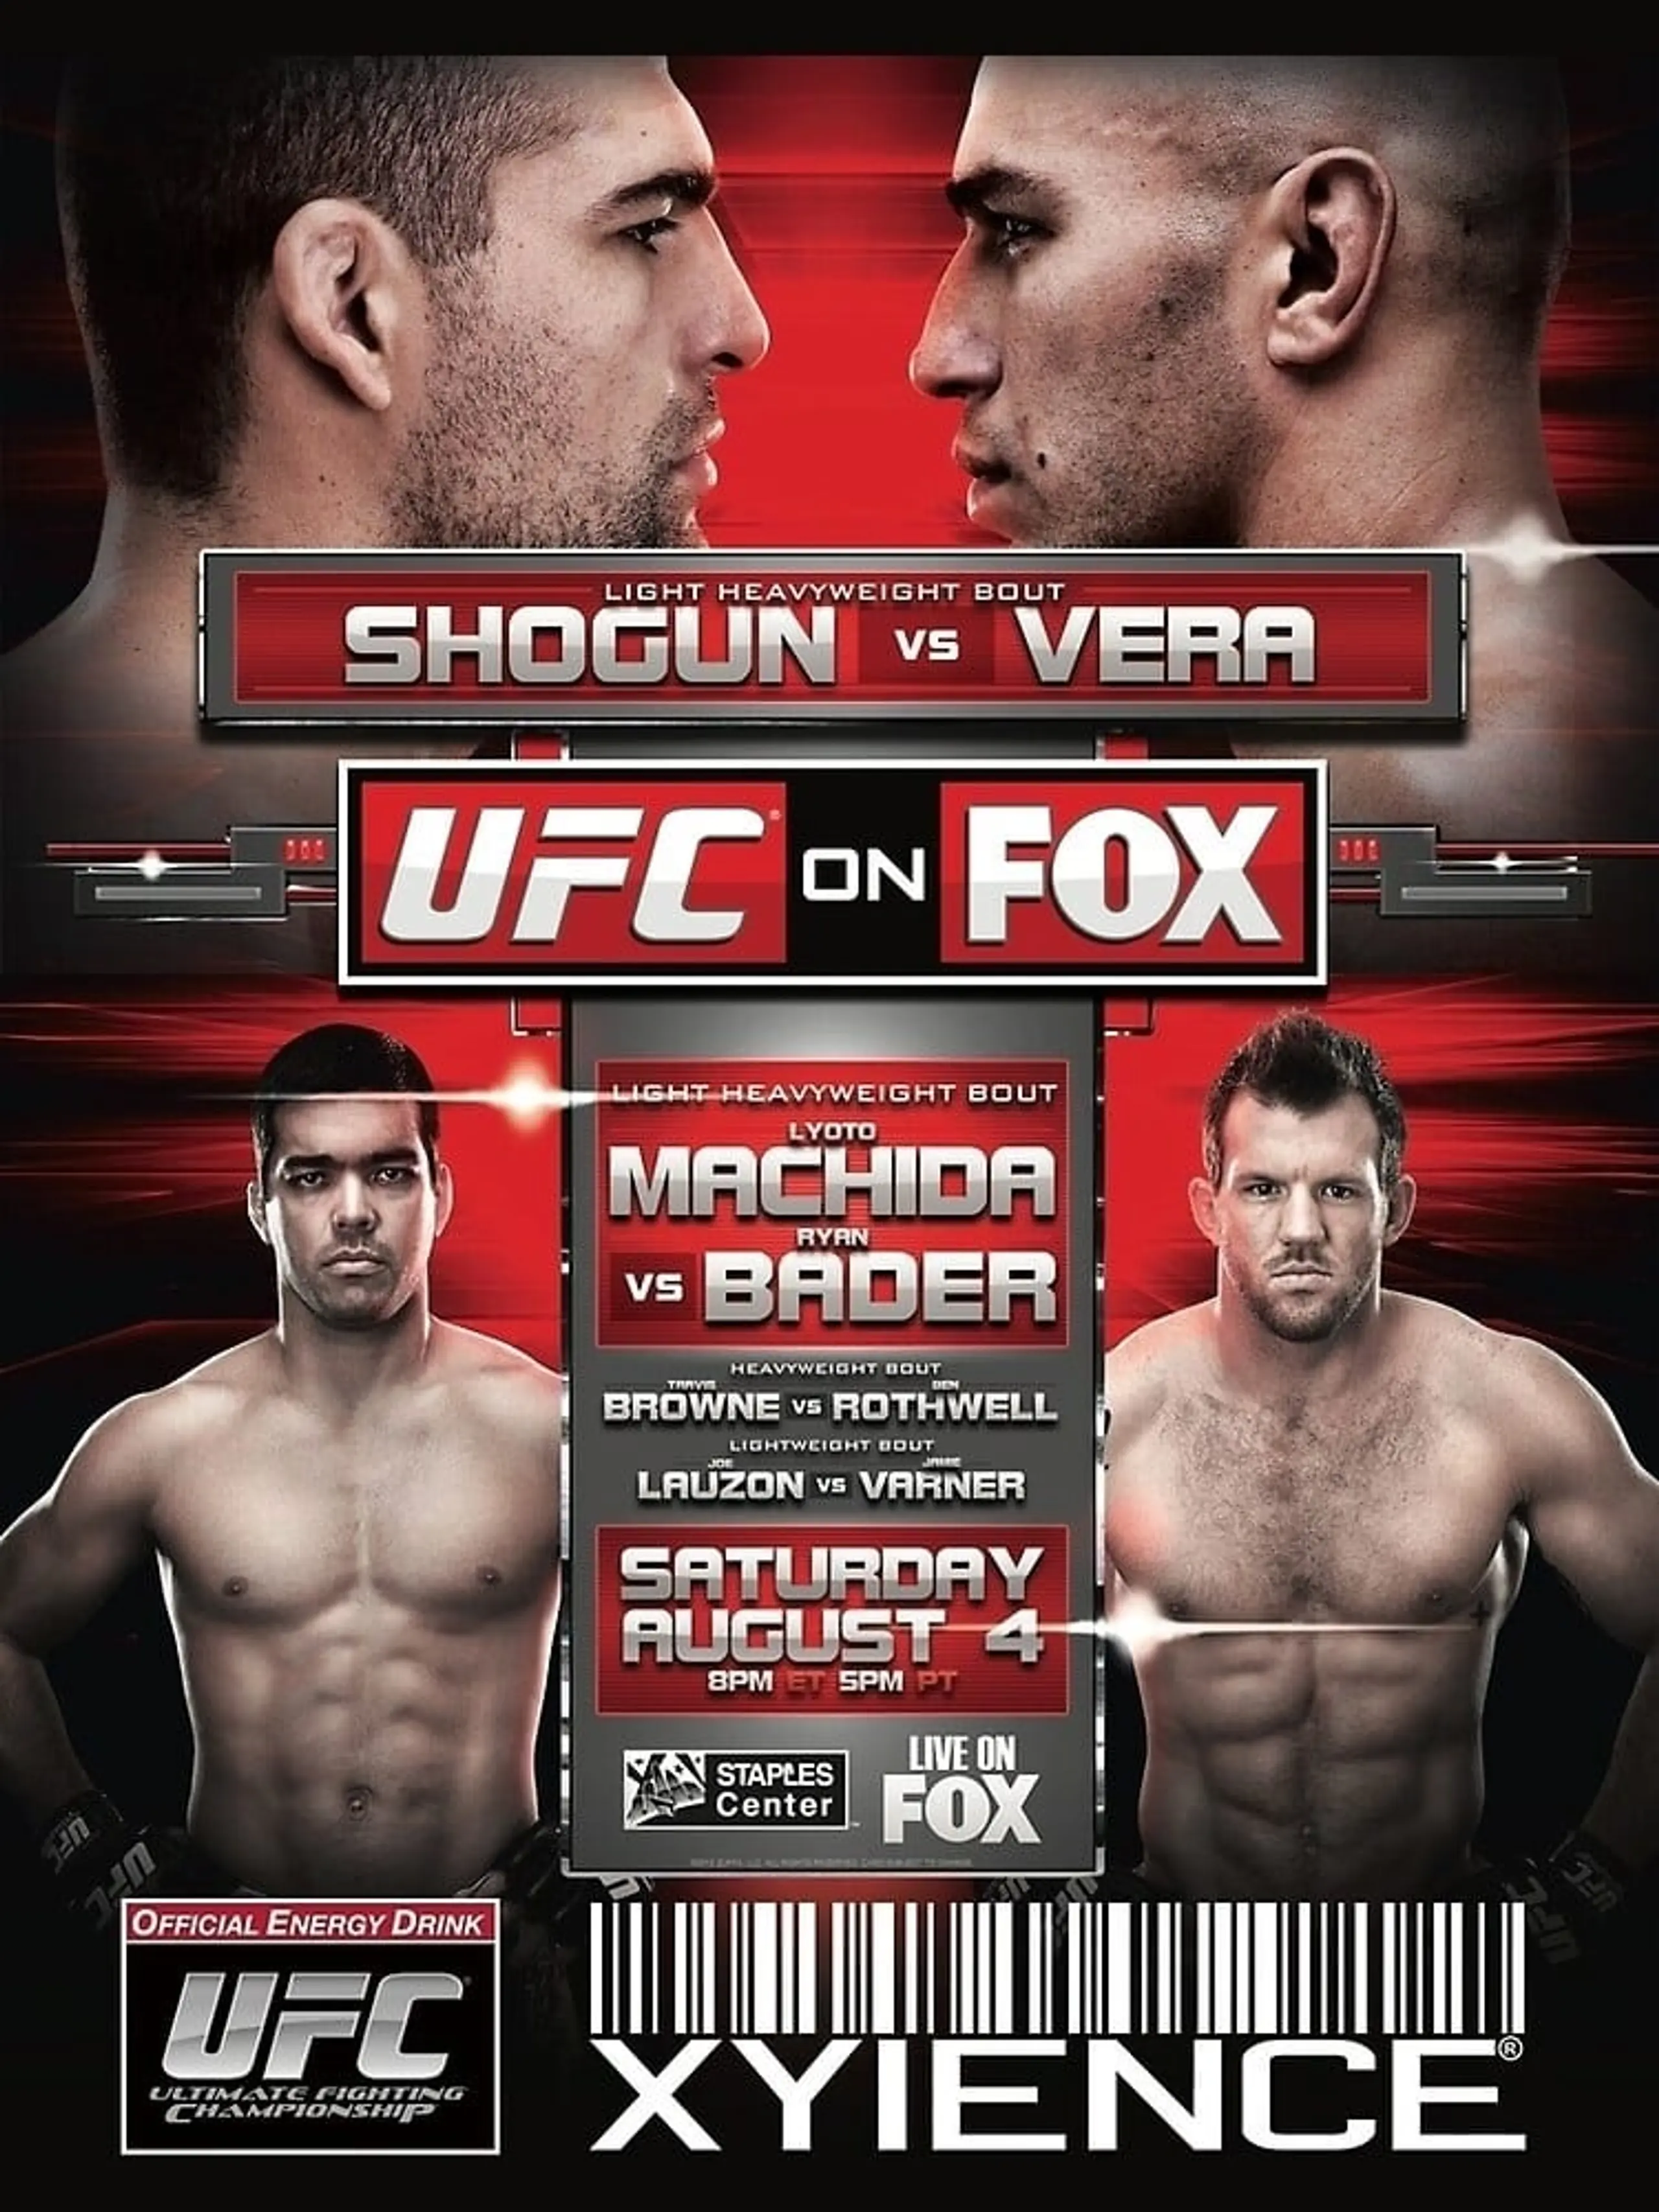 UFC on Fox 4: Shogun vs. Vera